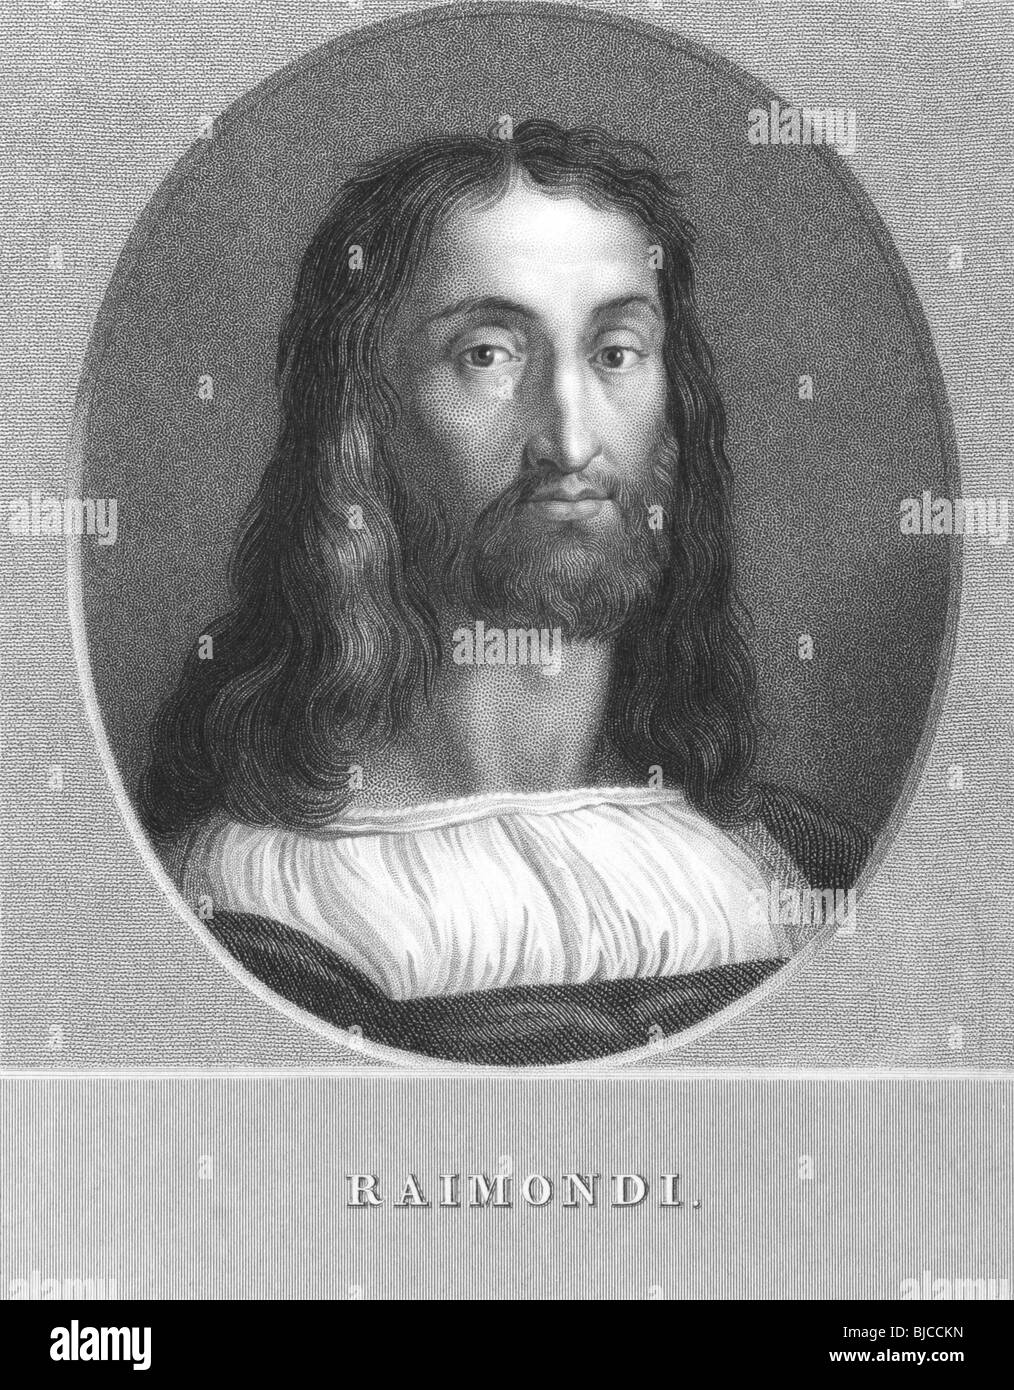 Marcantonio Raimondi (1480-1534) on engraving from the 1800s. Italian engraver. Stock Photo